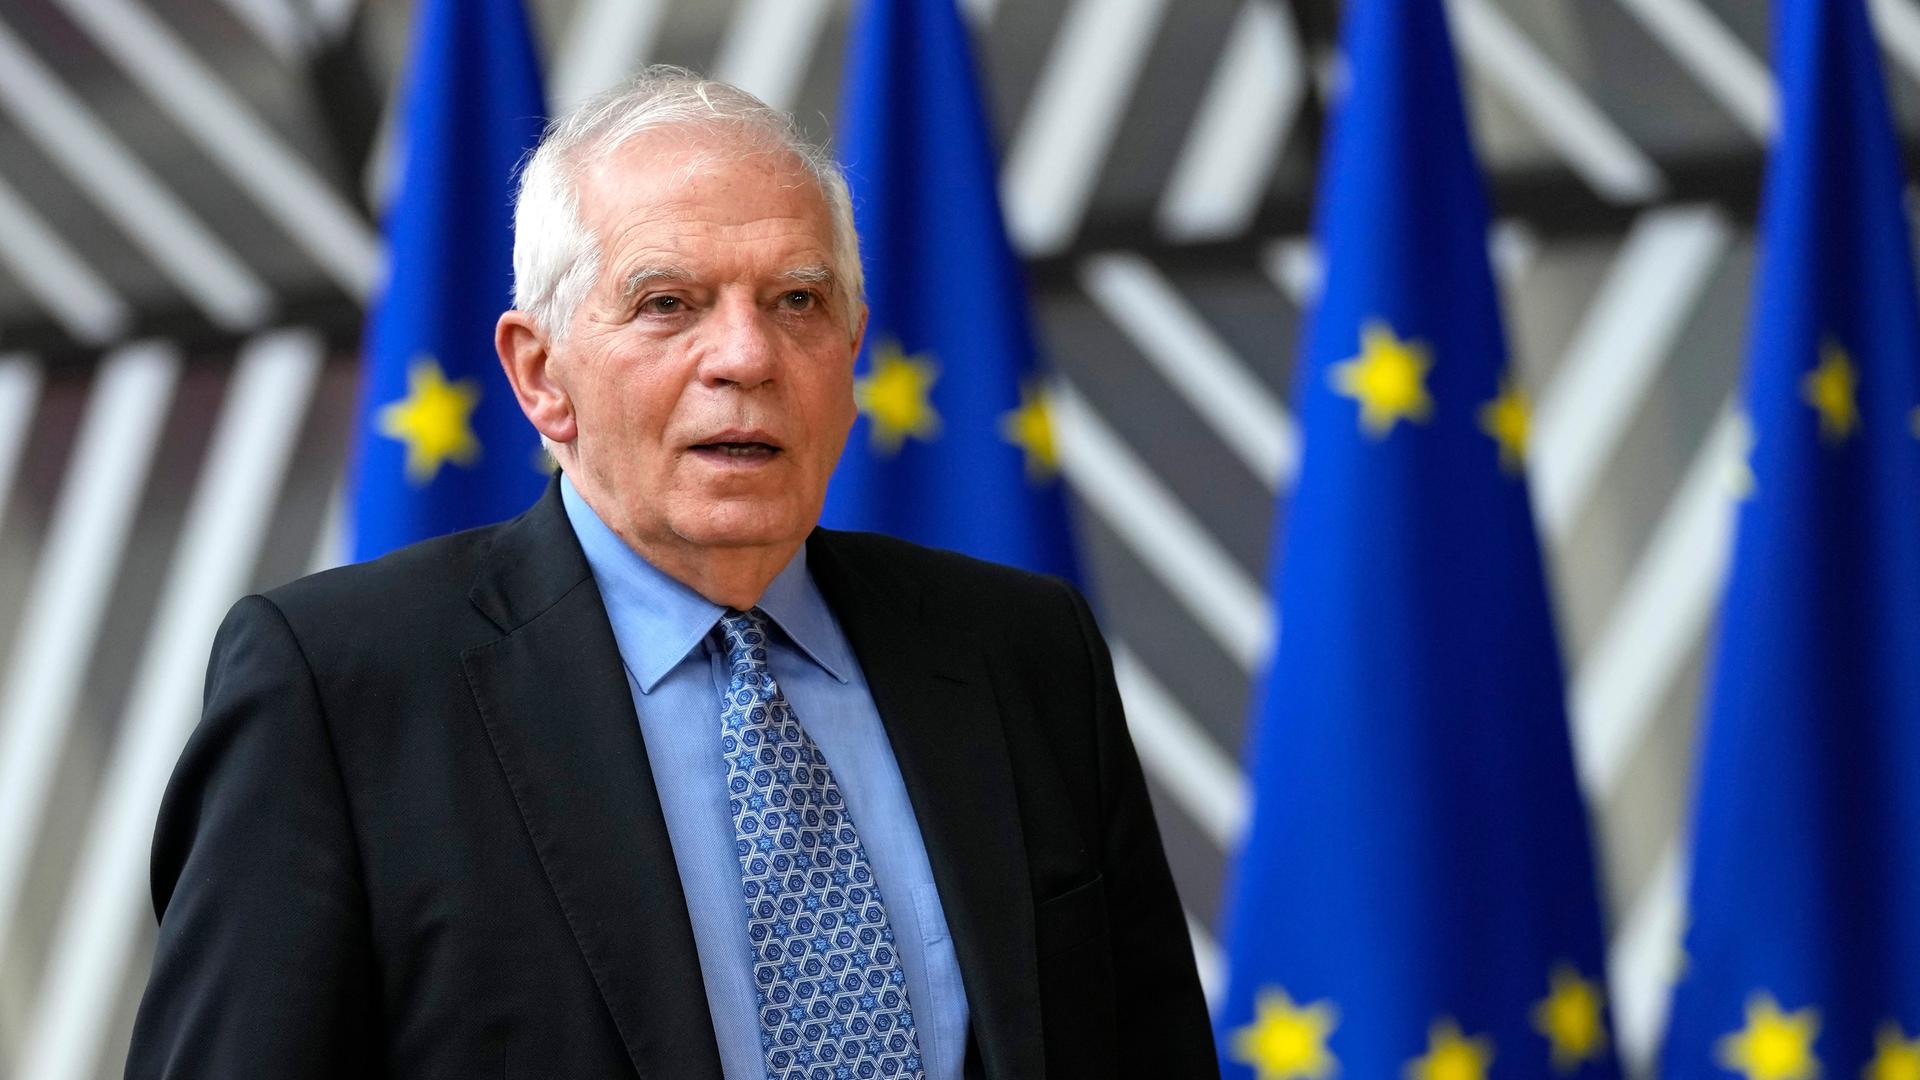 Josep Borrell steht in Brüssel vor mehreren EU-Flaggen.